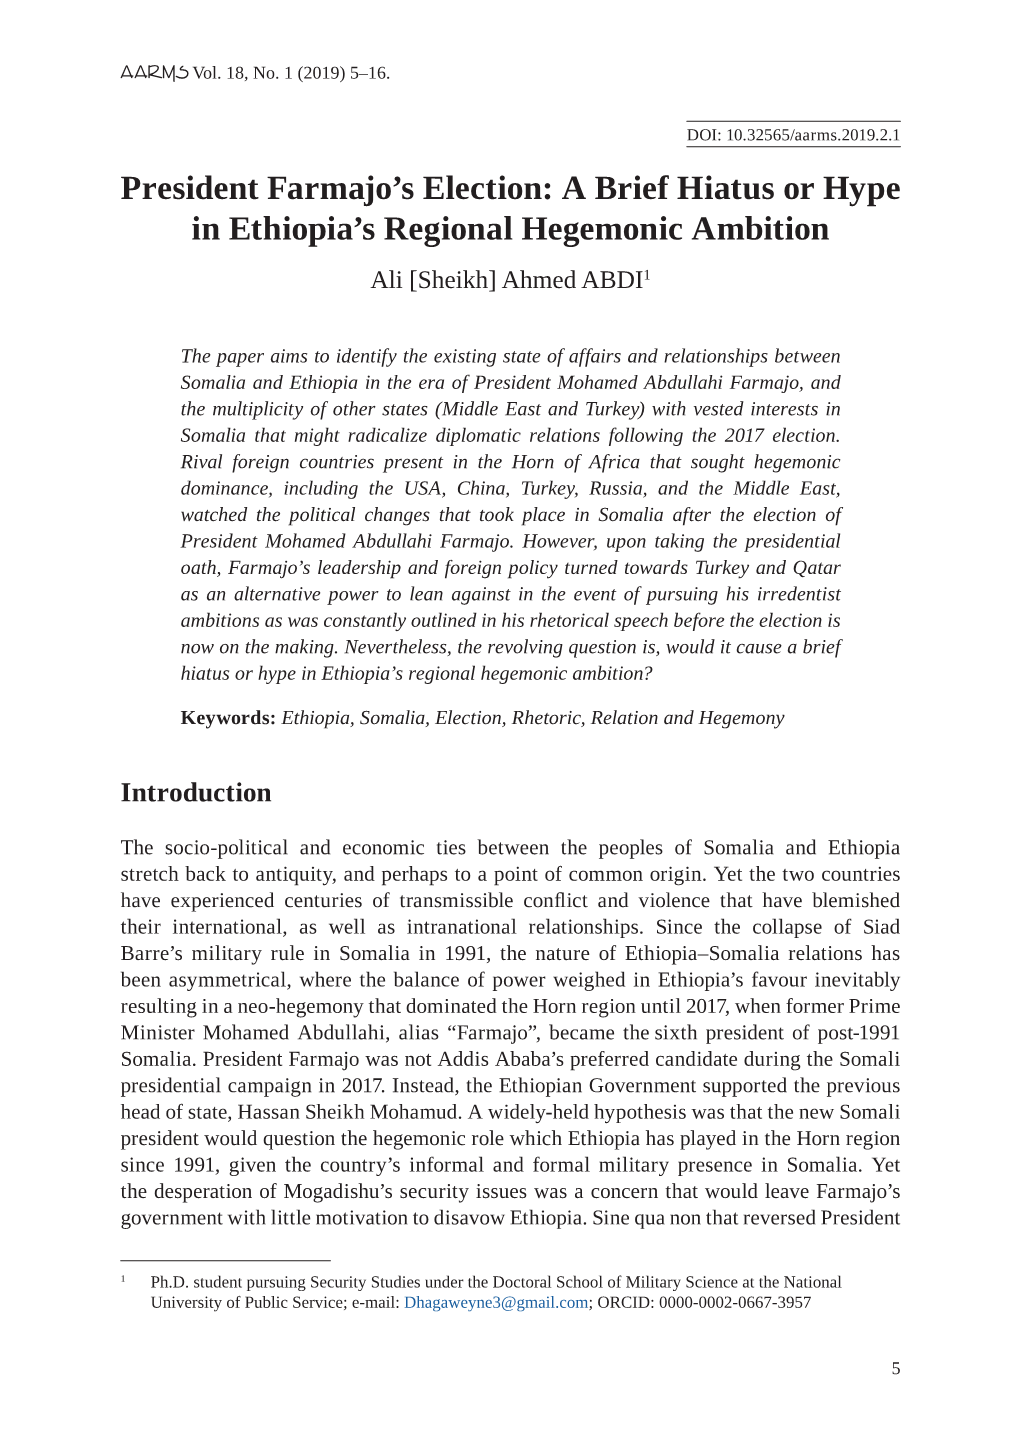 President Farmajo's Election: a Brief Hiatus Or Hype in Ethiopia's